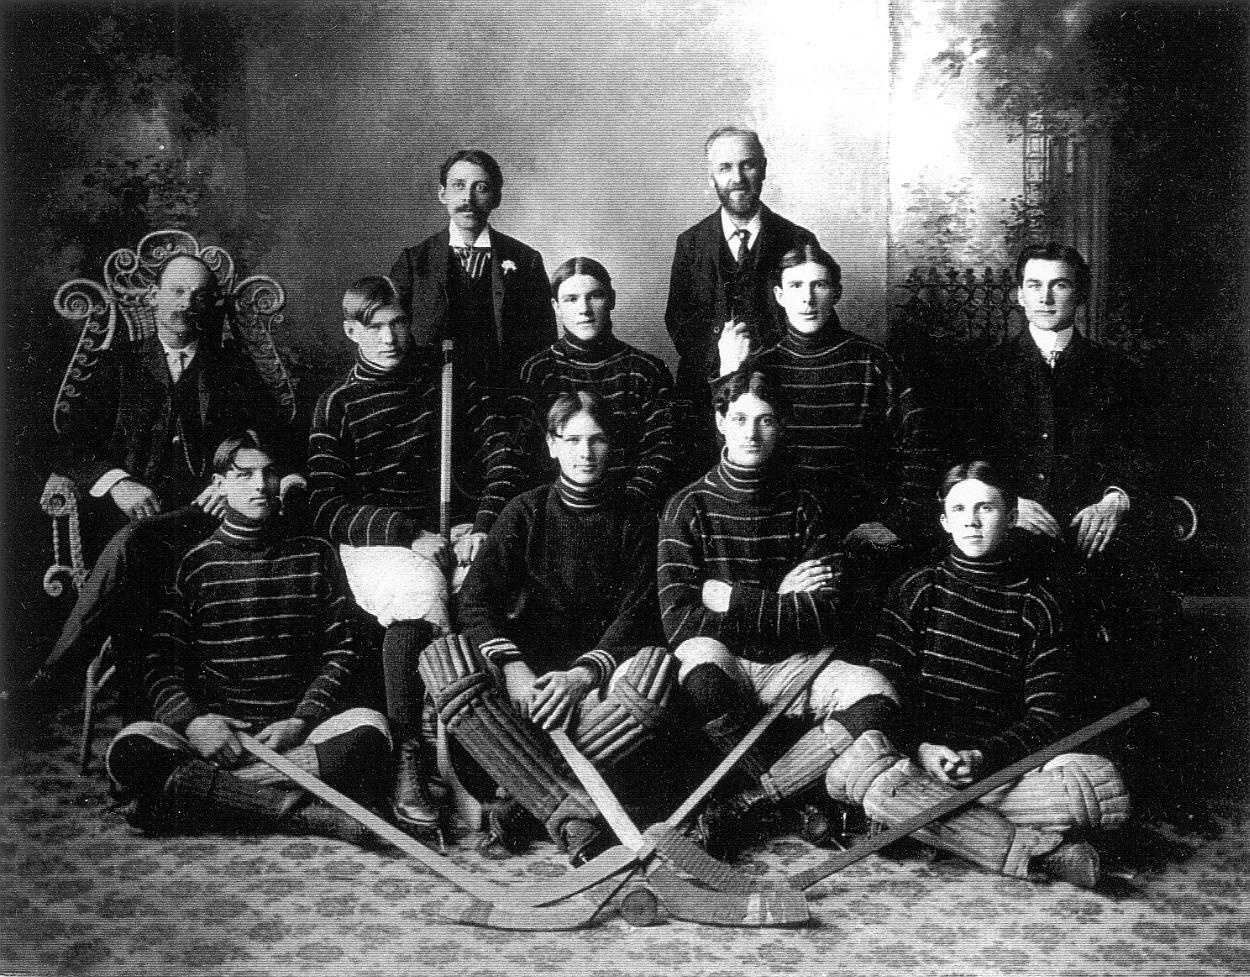 Men's hockey team, 1903-1904, Merrickville, Ontario